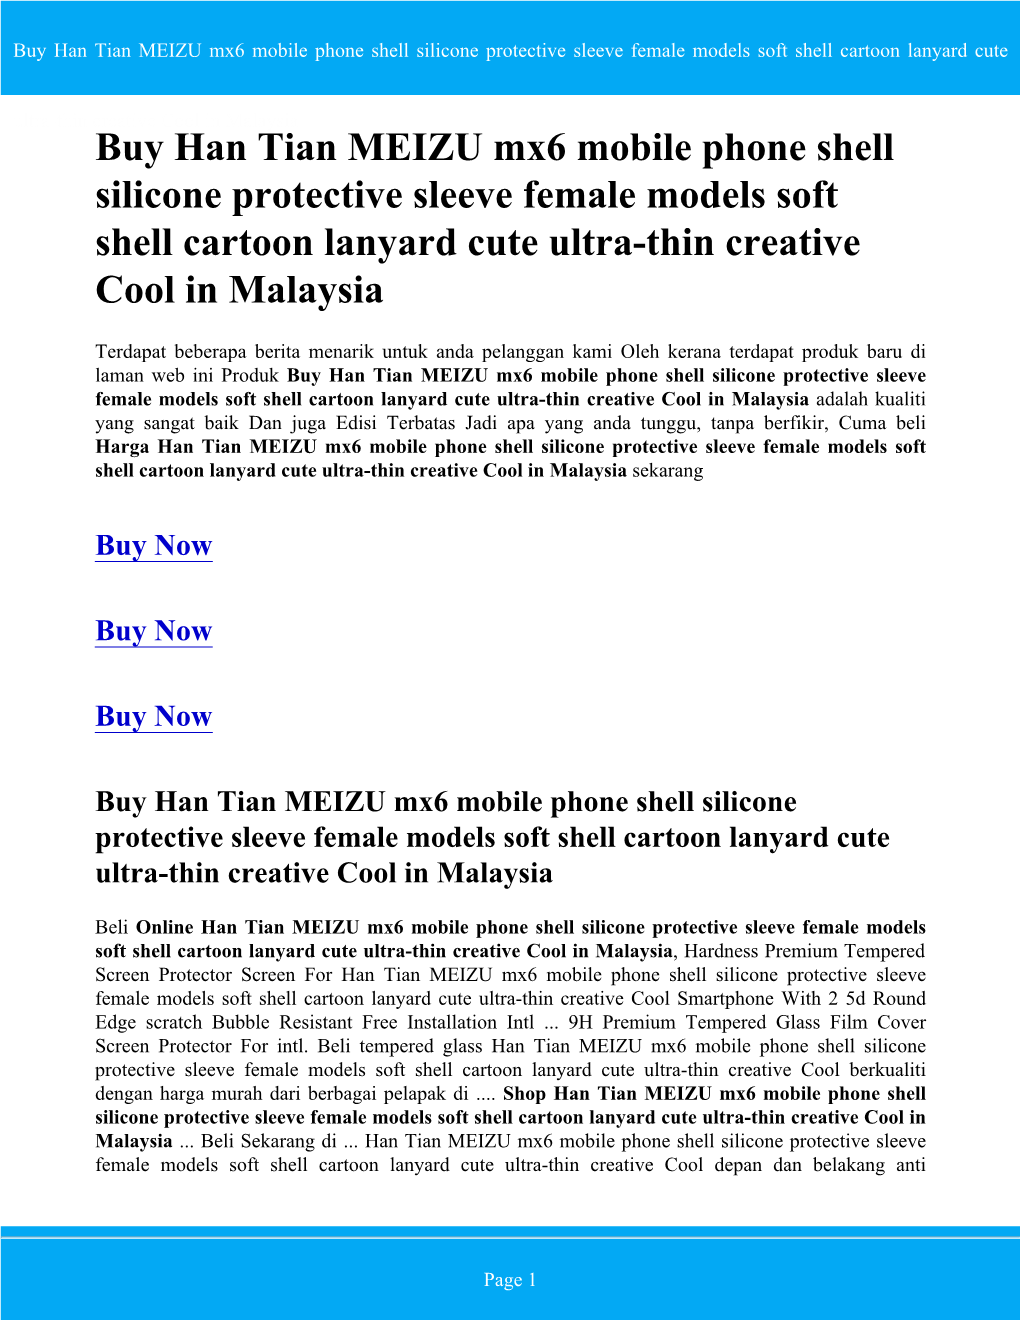 Buy Han Tian MEIZU Mx6 Mobile Phone Shell Silicone Protective